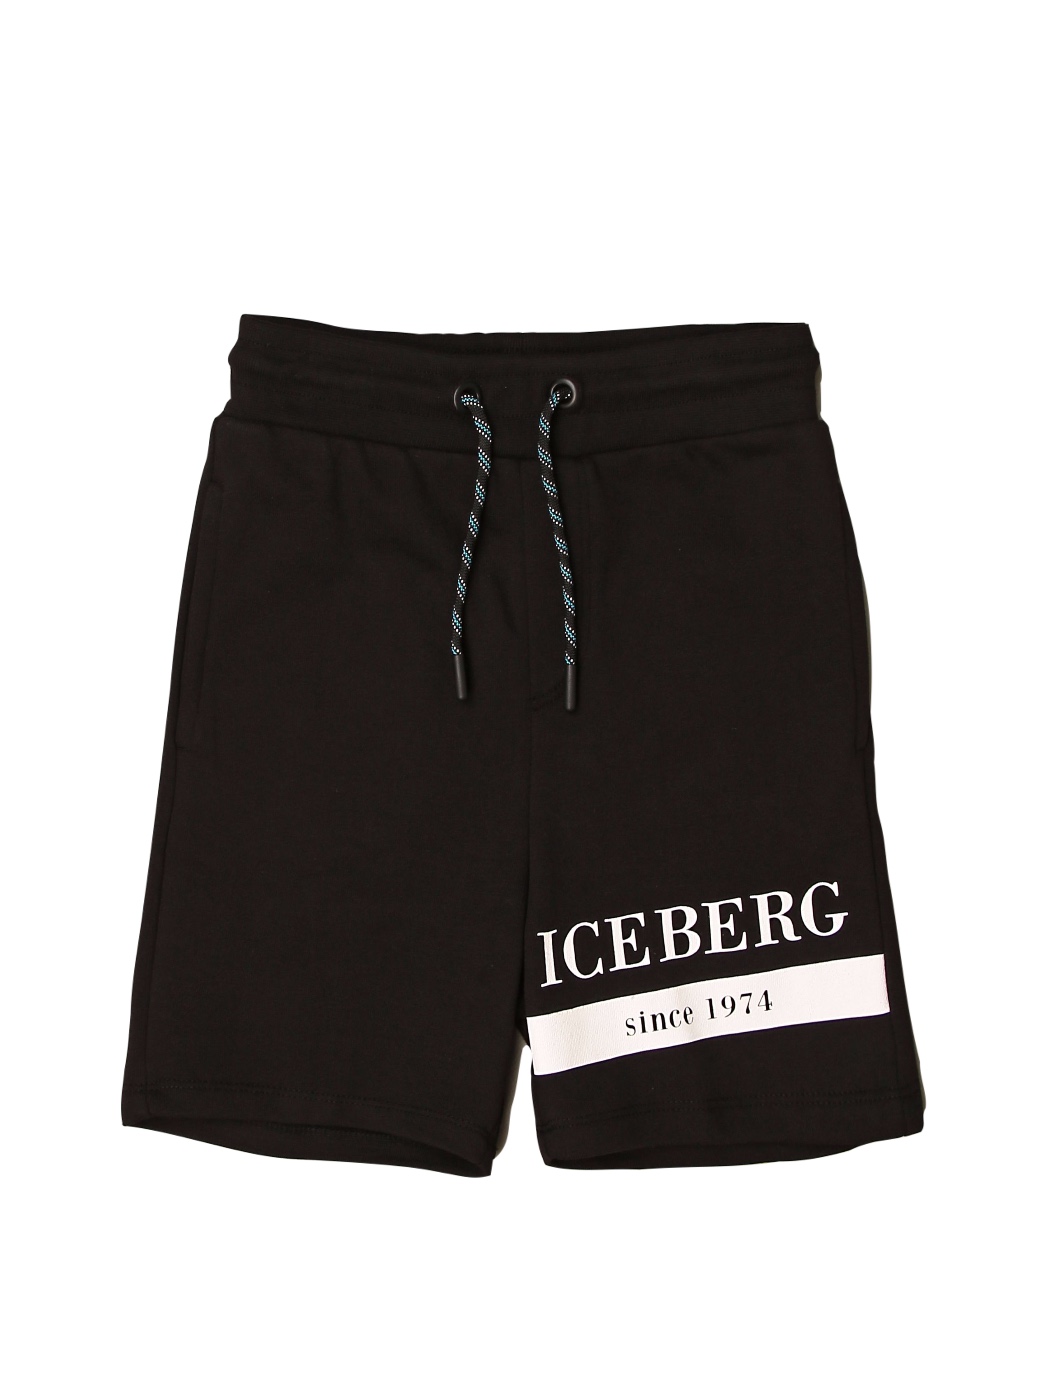 Featured image for “ICEBERG BERMUDA CON LOGO”